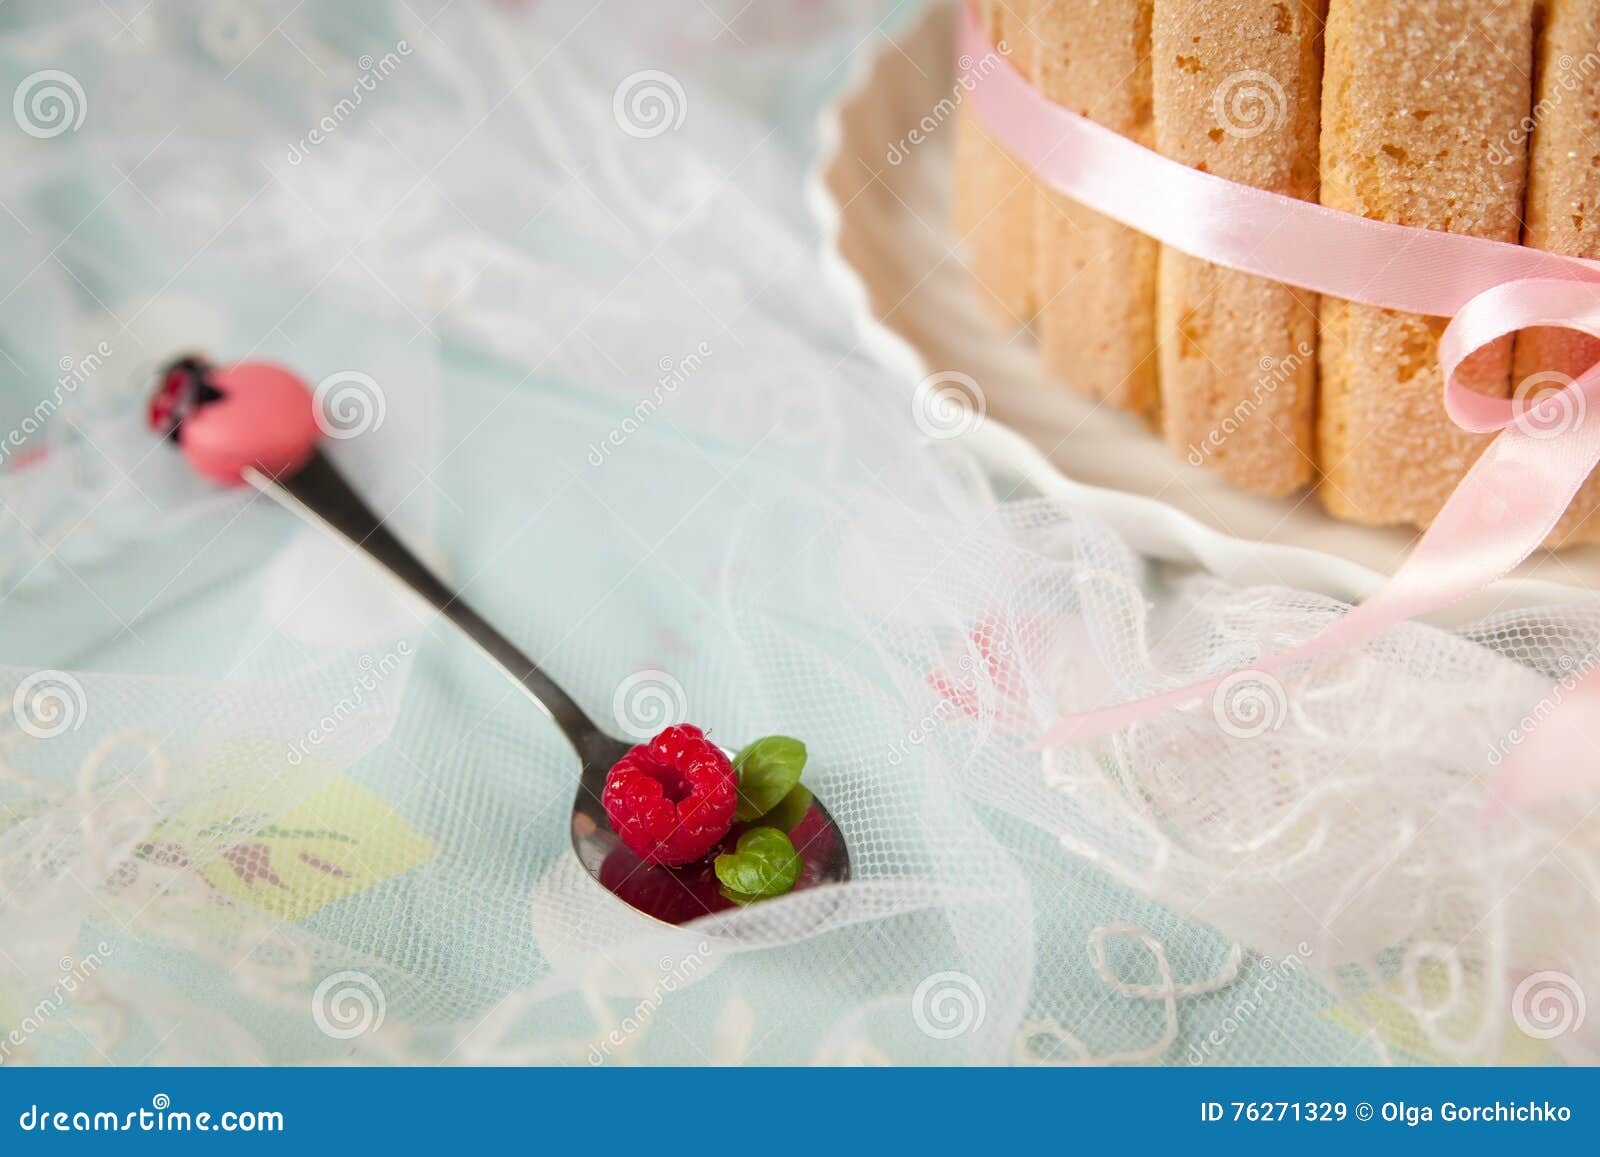 Tiramisu Cake Charlotte Decorated With Raspberry Stock Image Image Of Dessert Flower